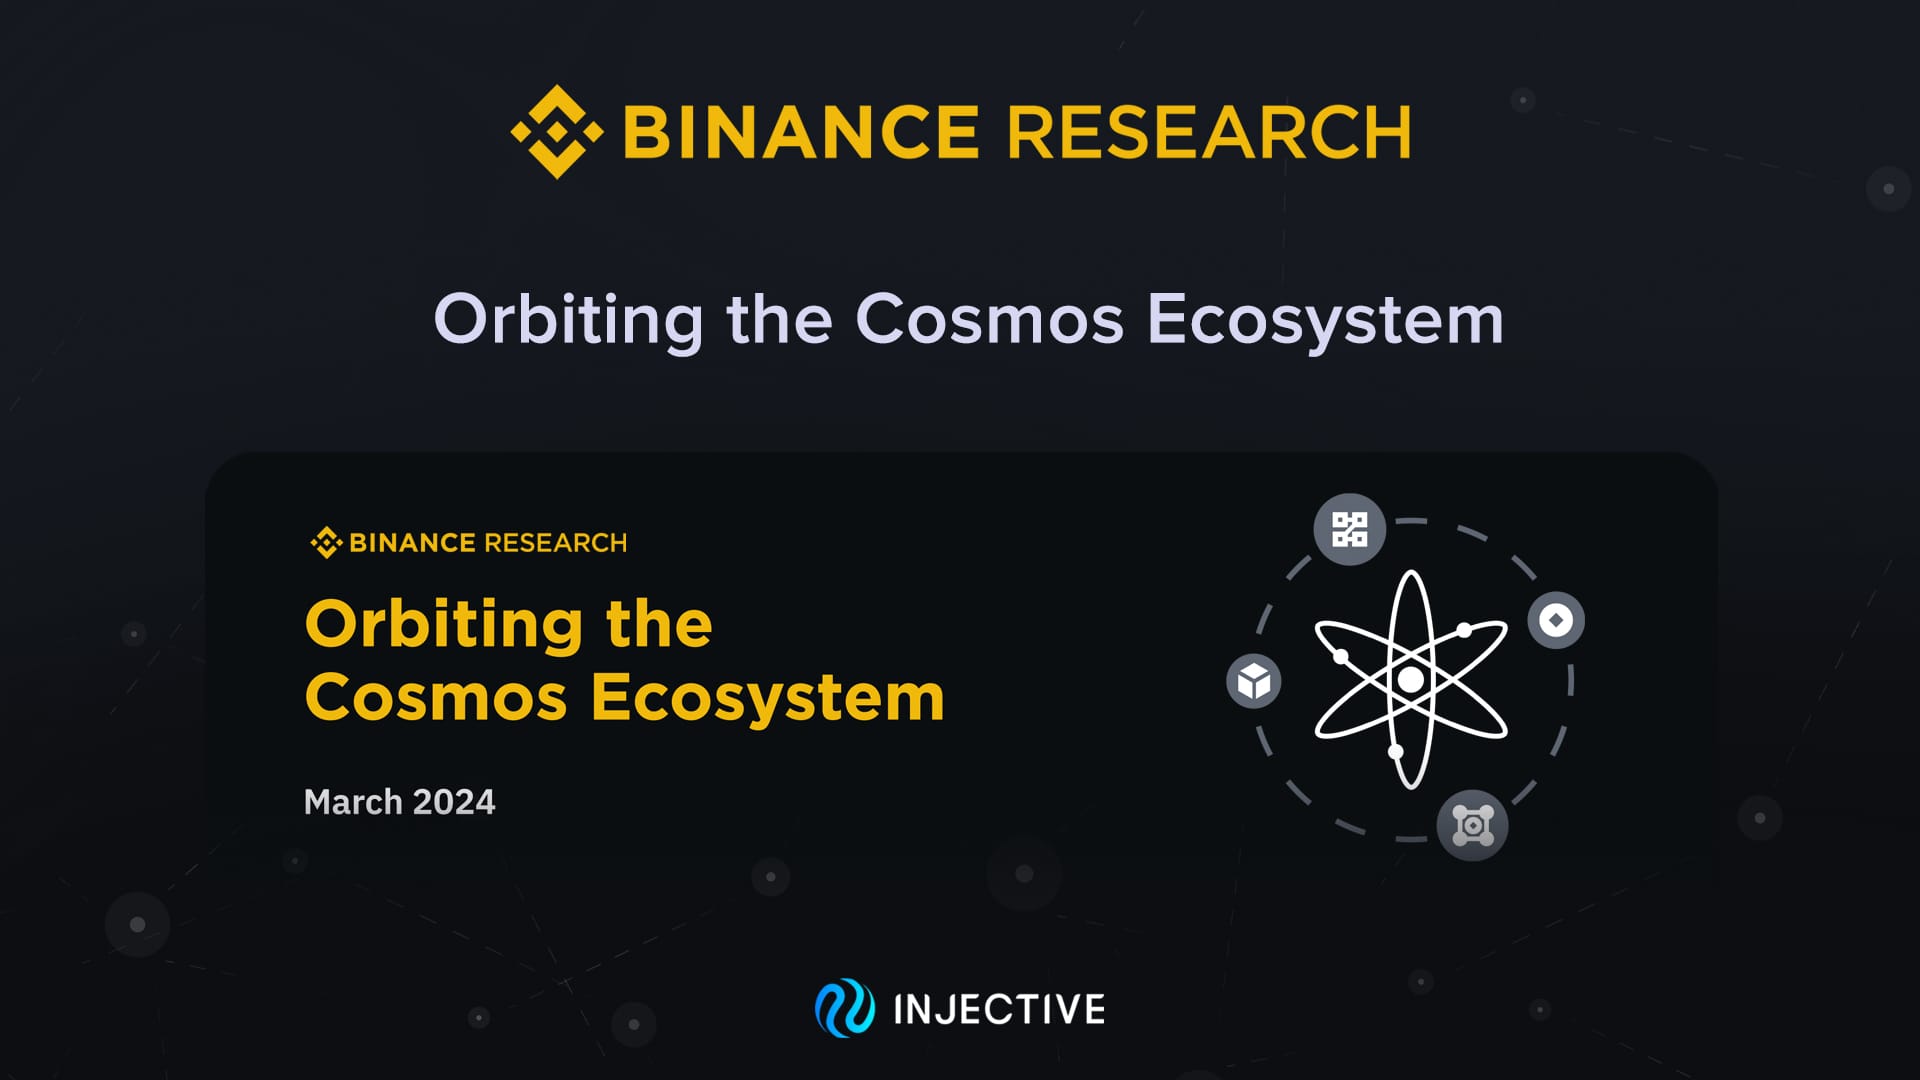 (Binance Research) Orbiting the Cosmos Ecosystem